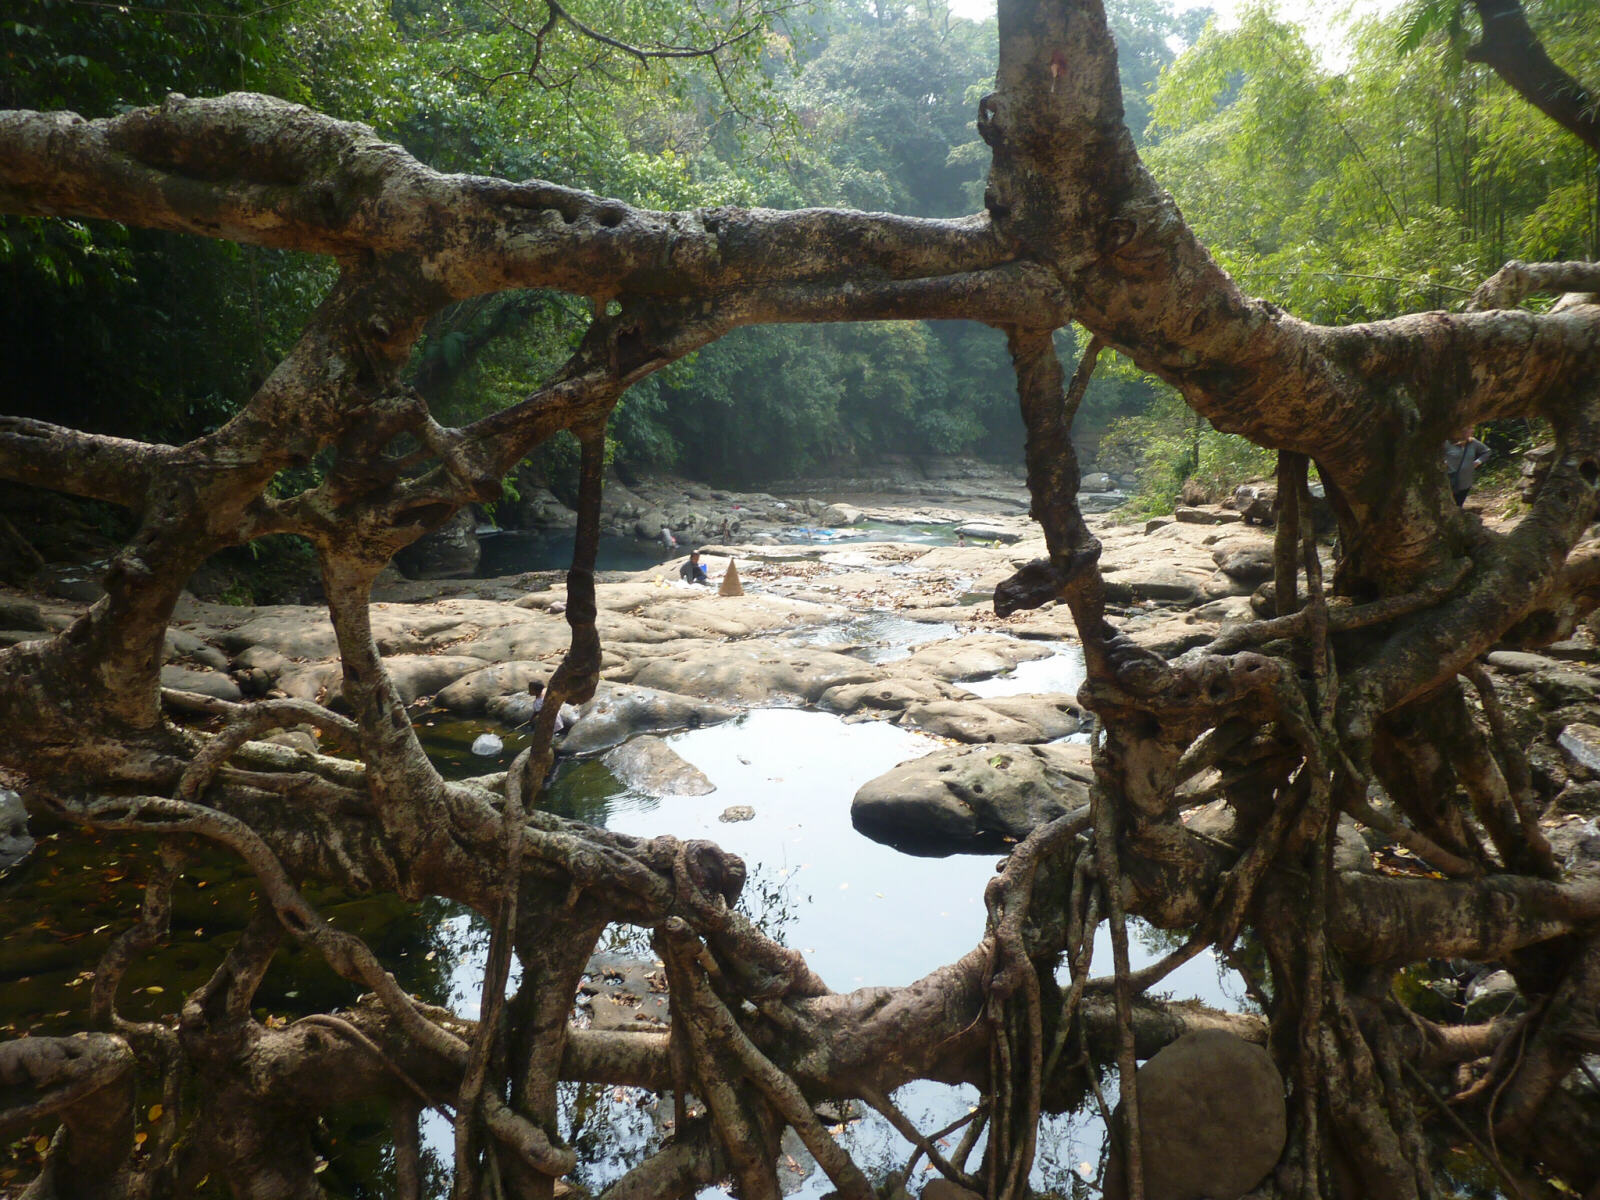 The river at Rivai village, Meghalaya state, India